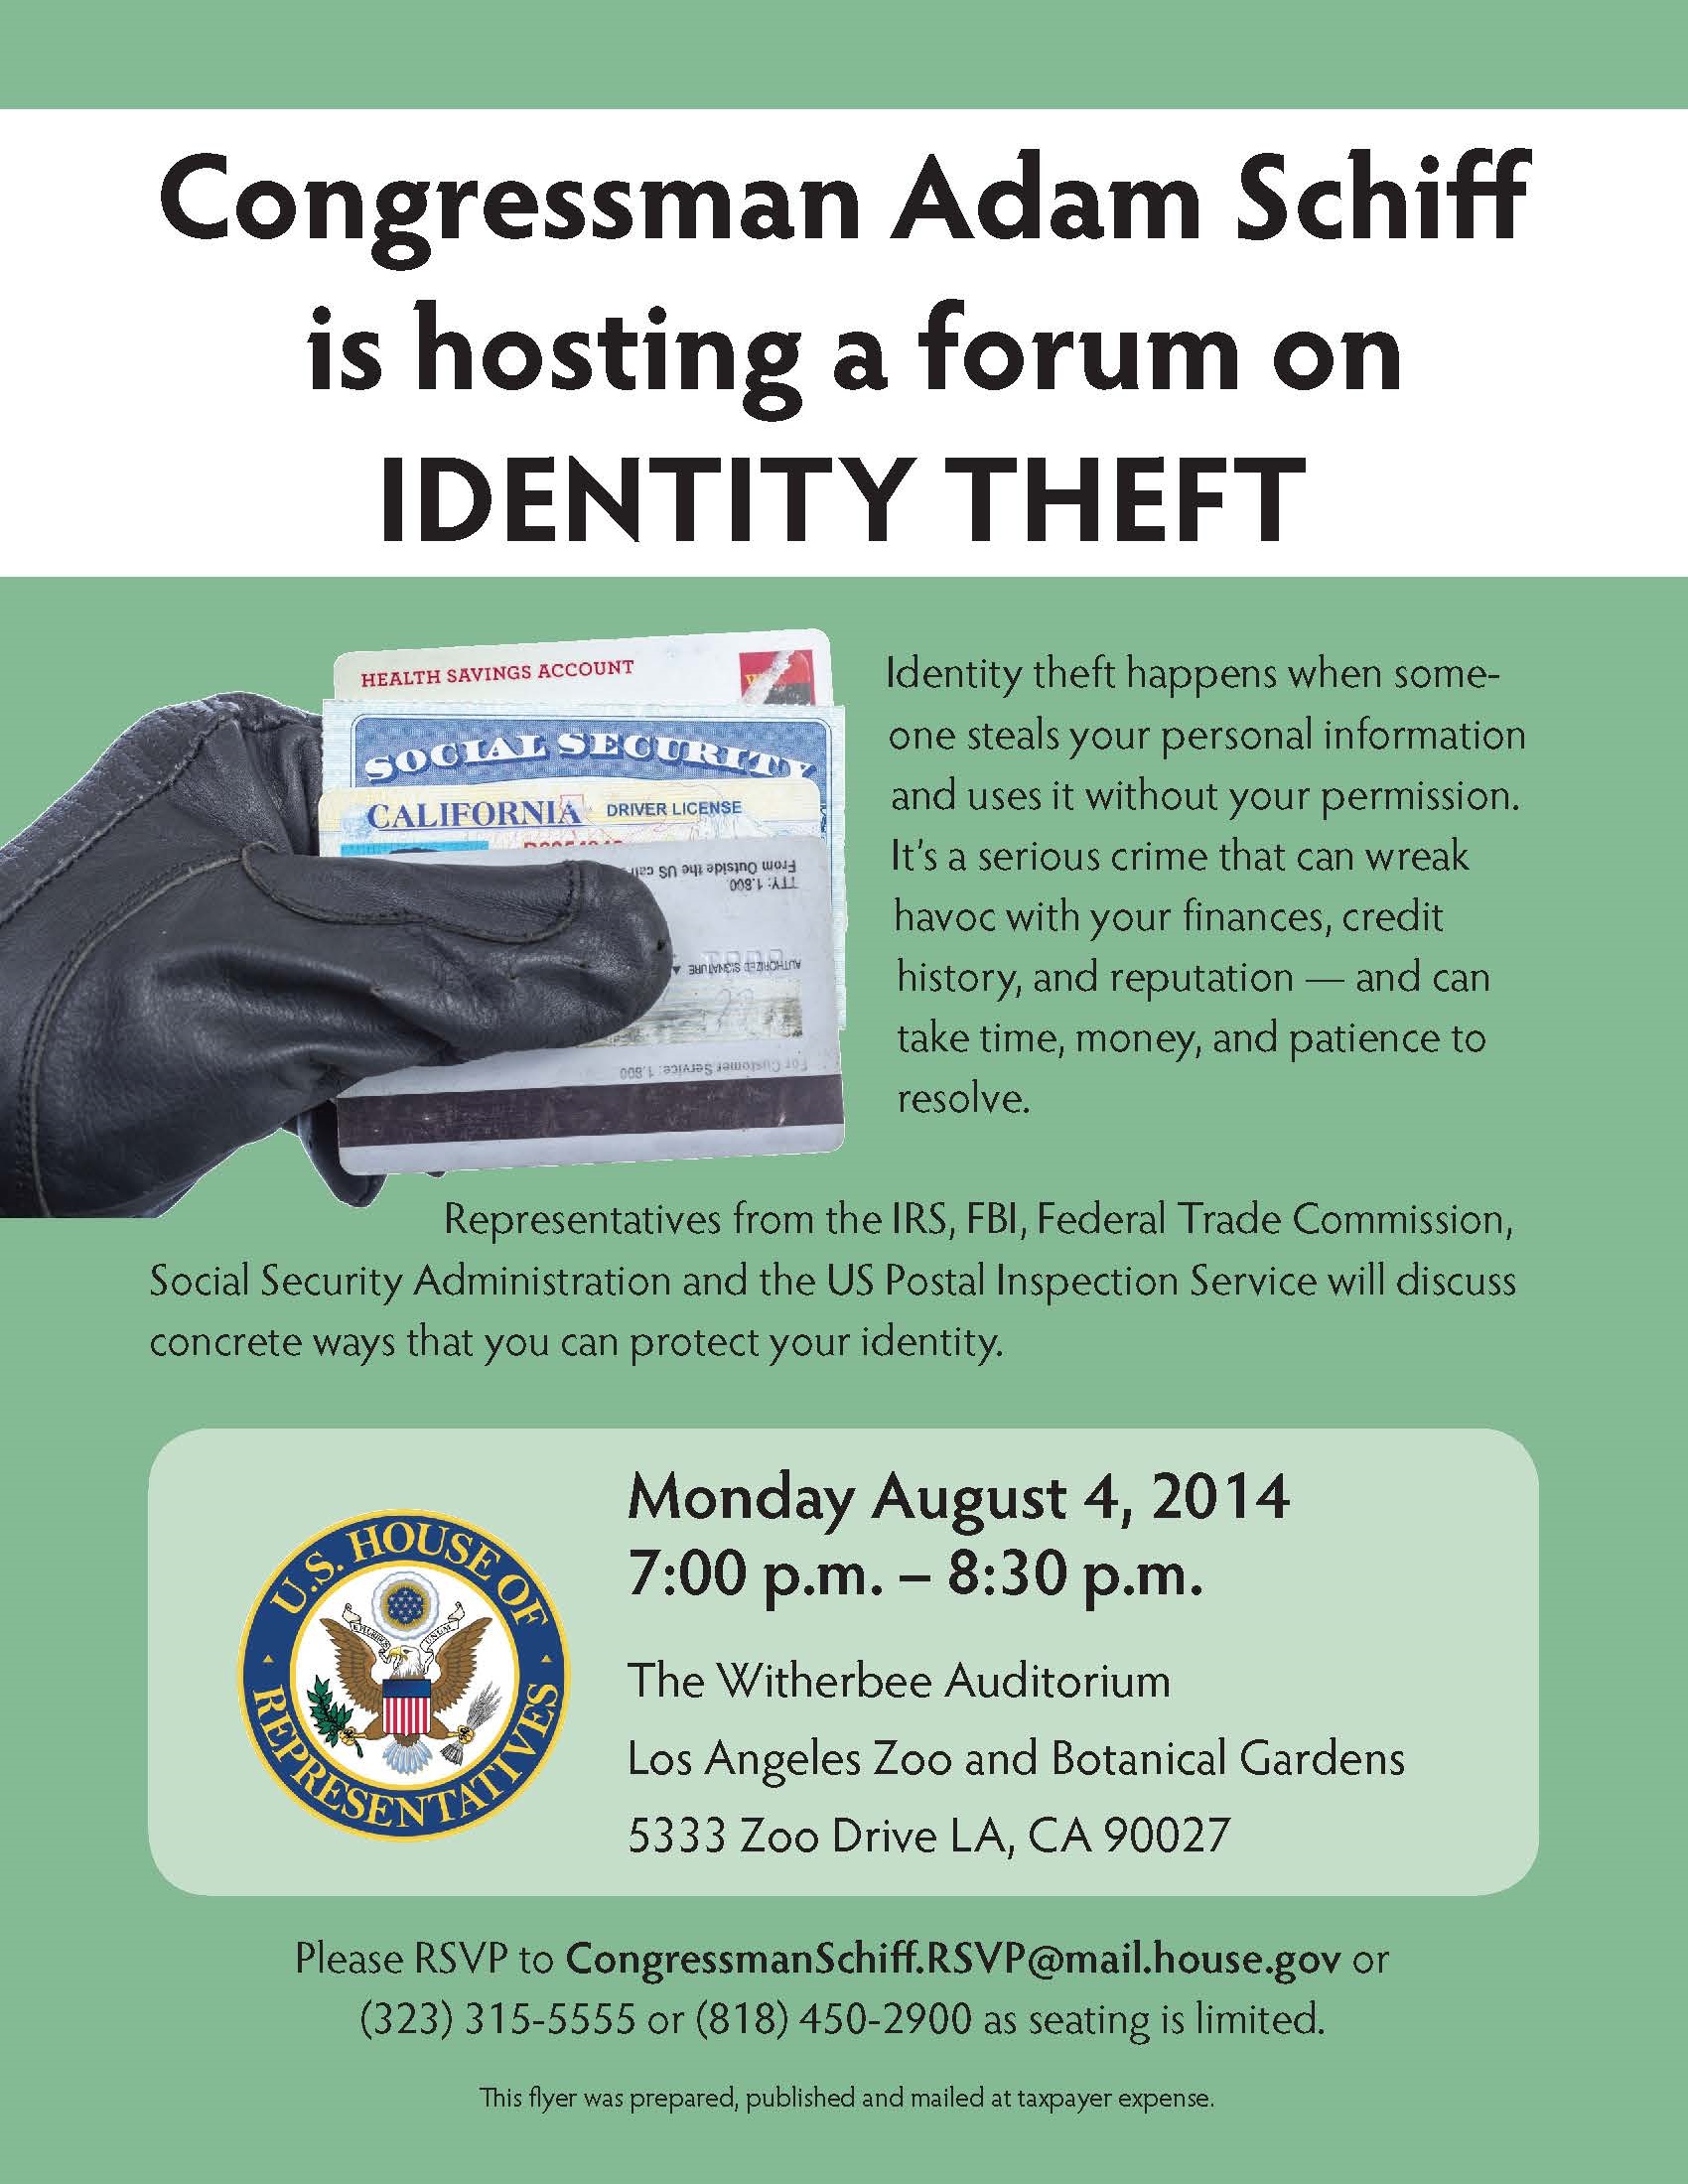 ID-theft 614